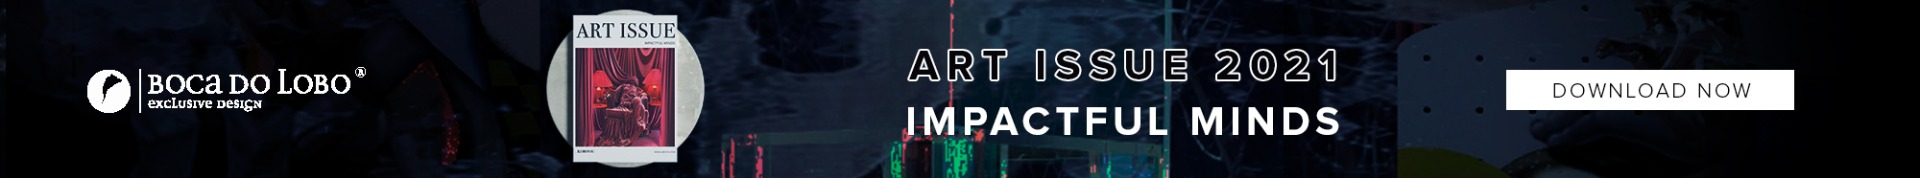 ART ISSUE 2021 - IMPACTFUL MINDS